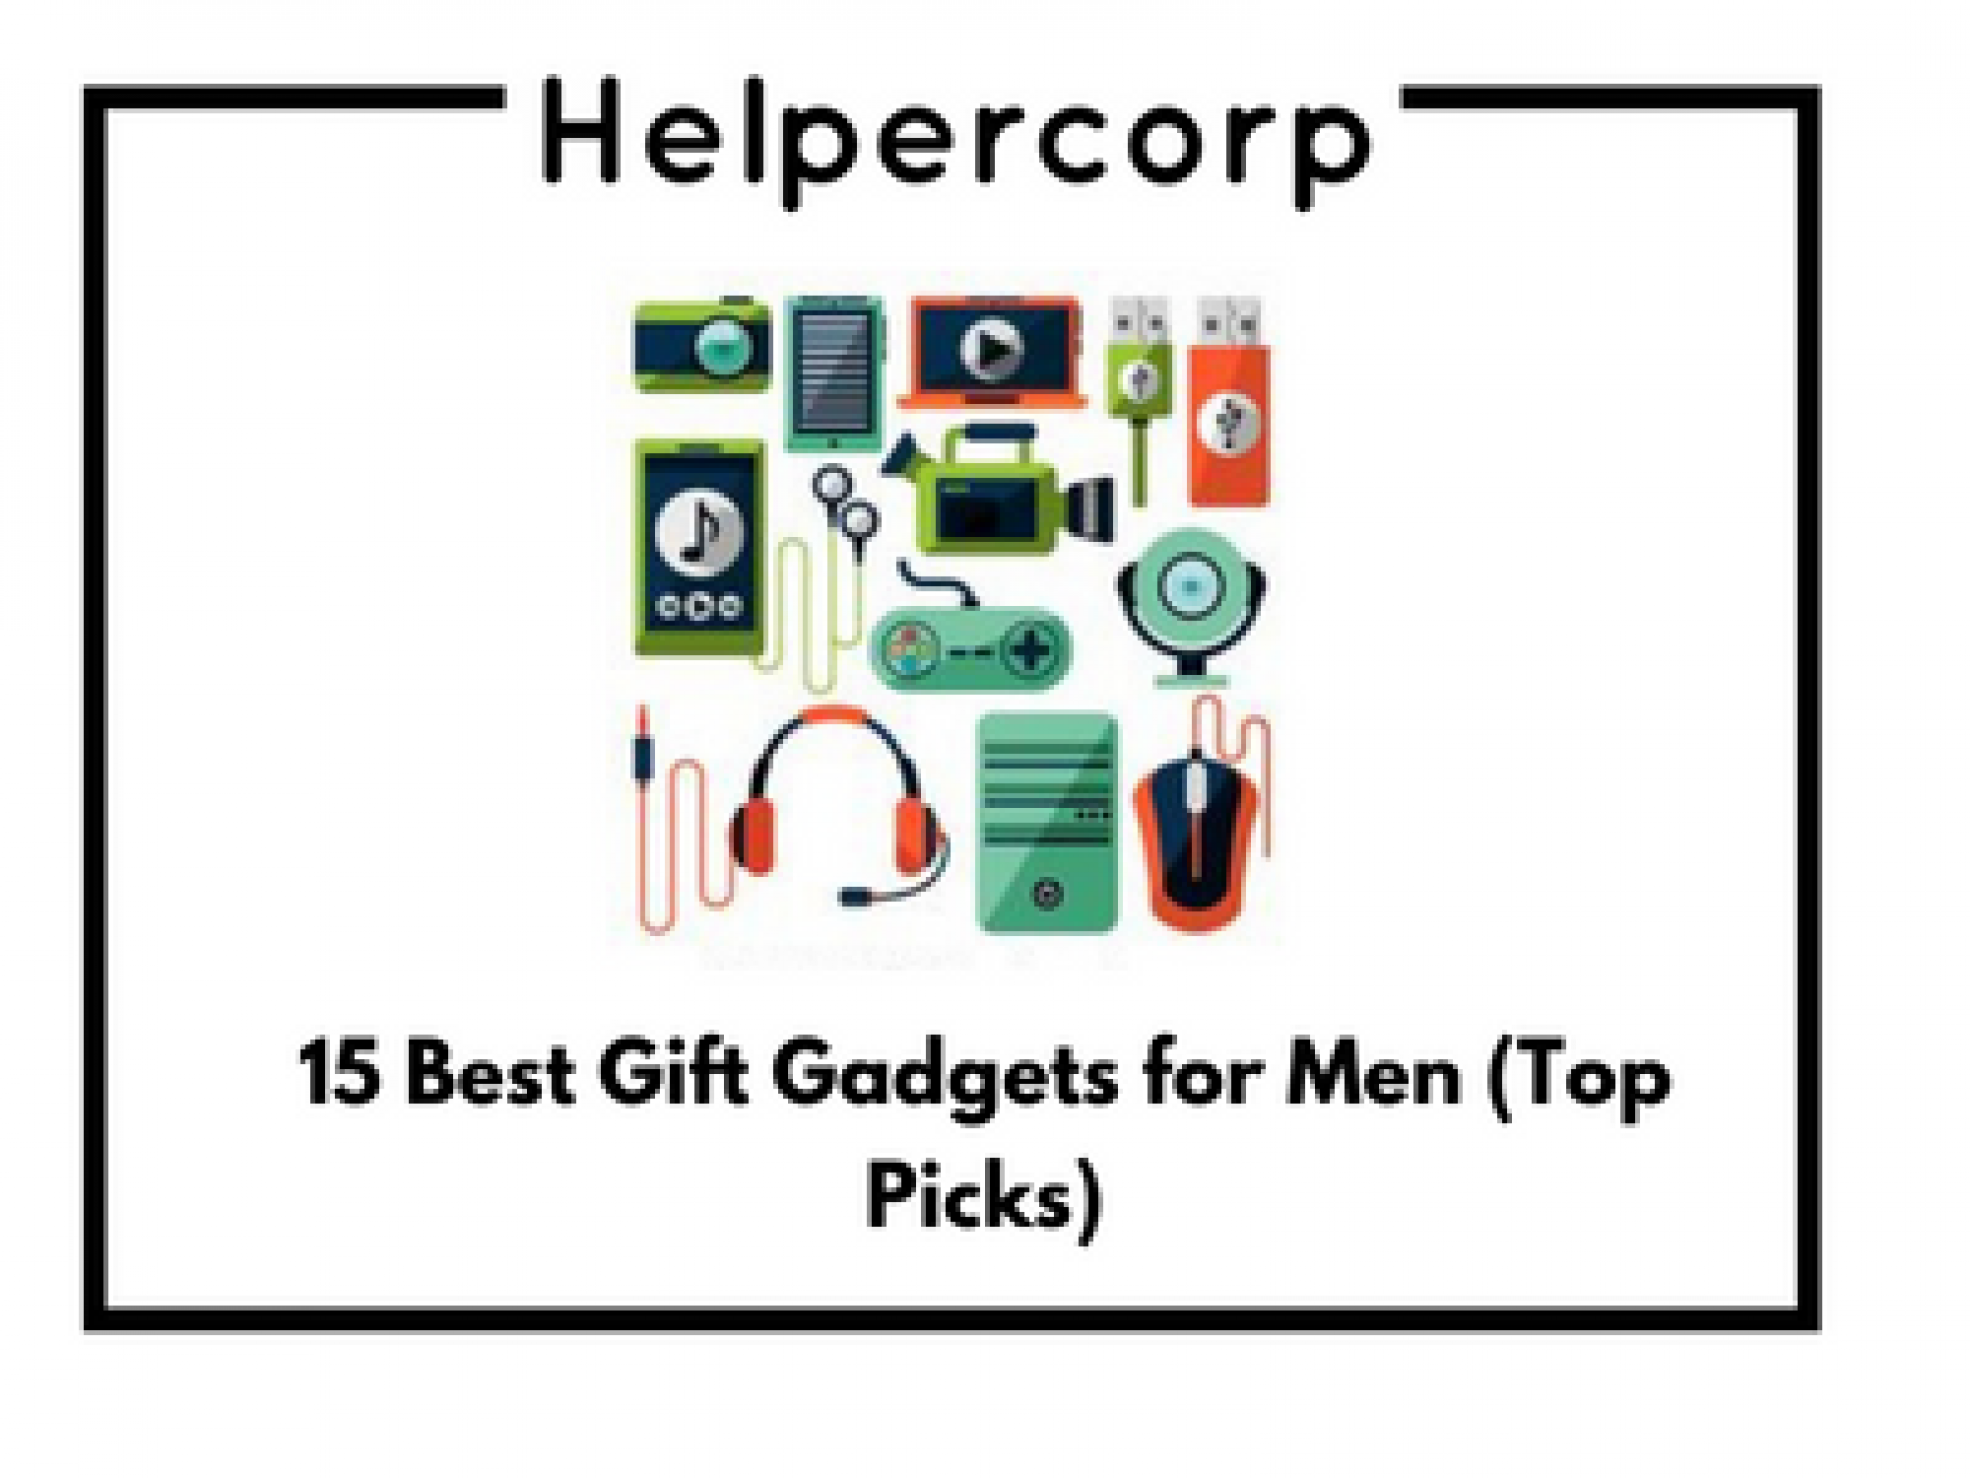 Best Gift Gadgets for Men